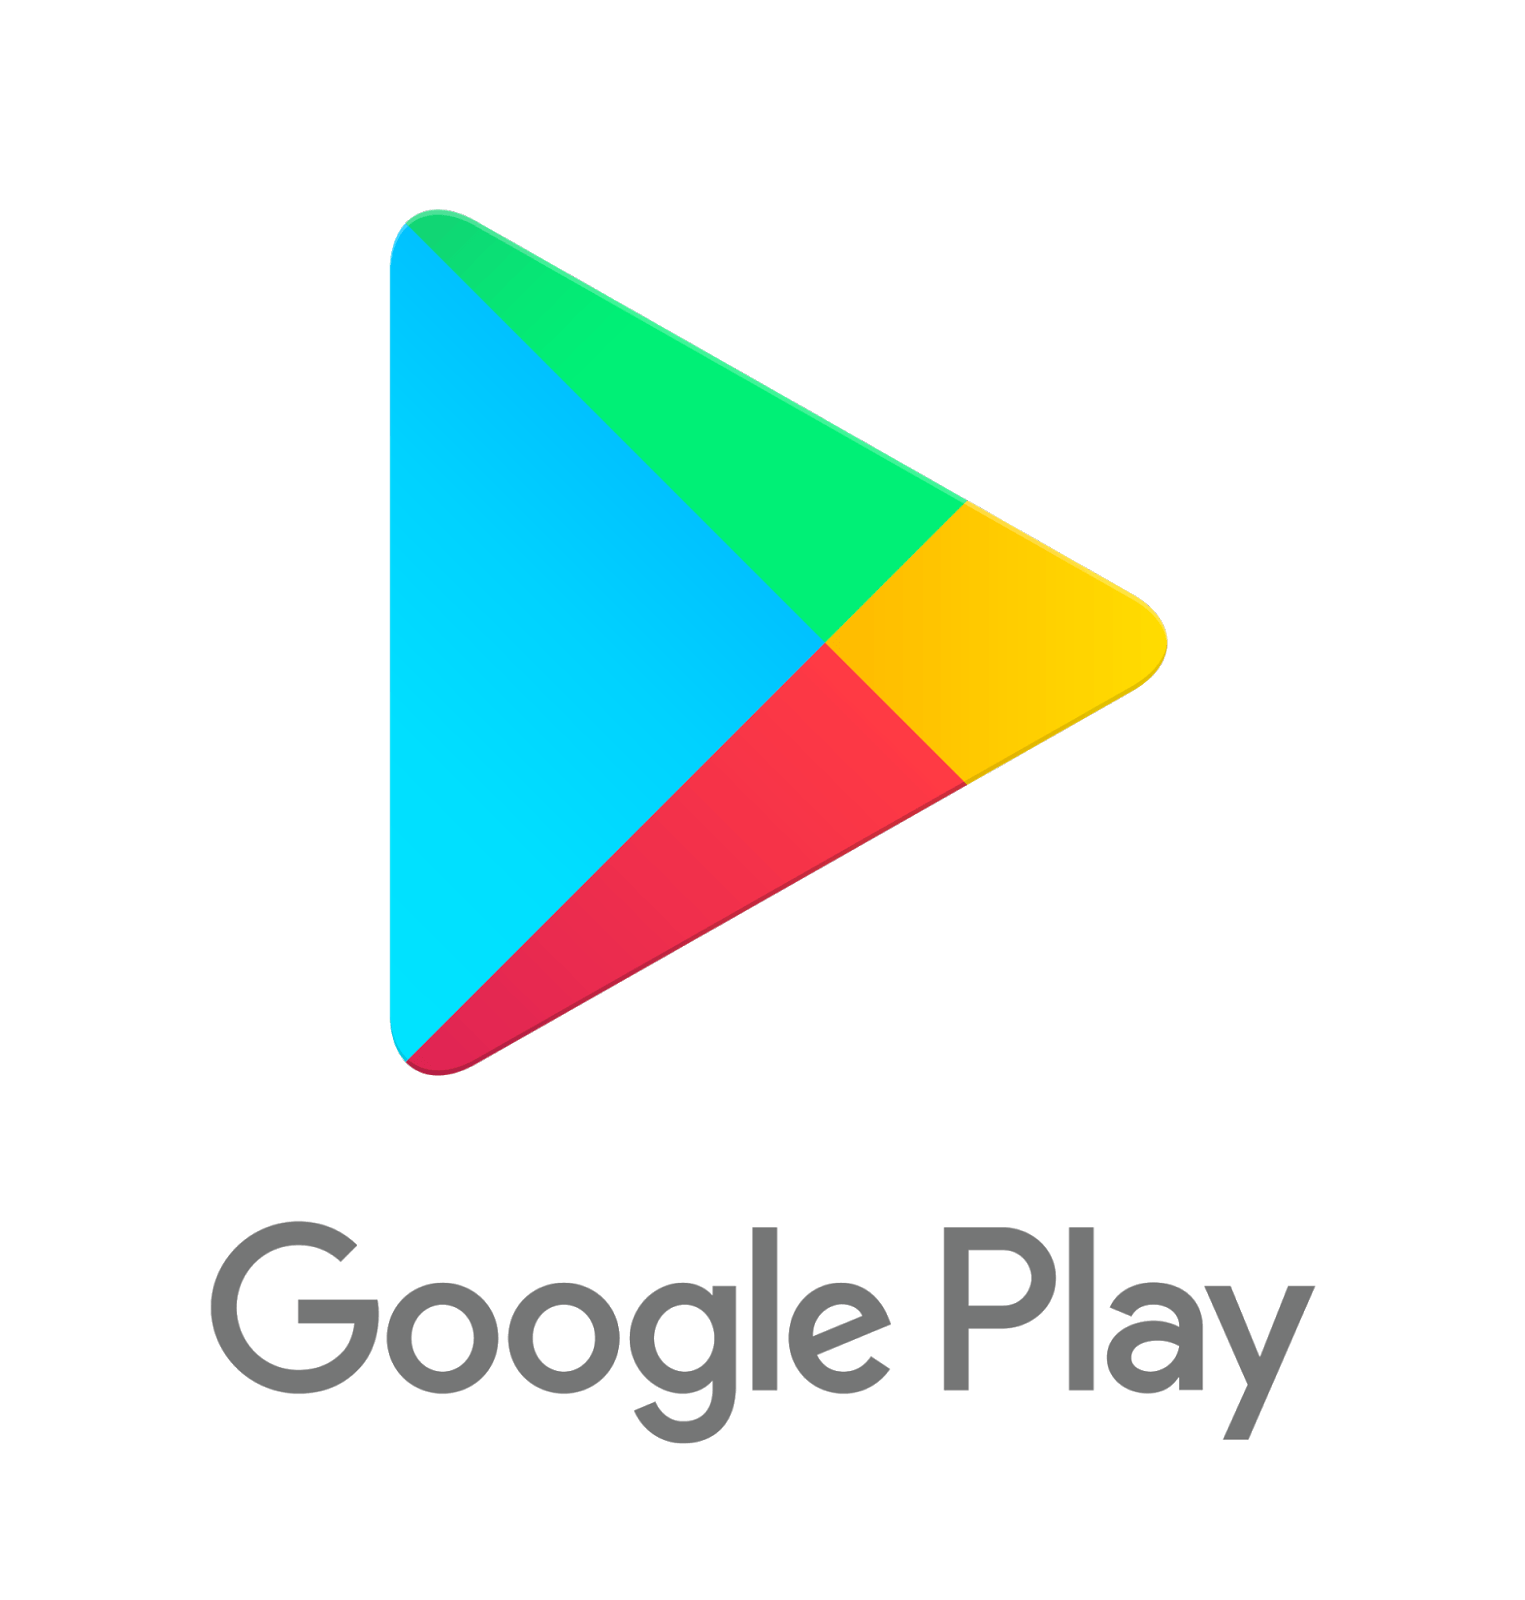 Get It On Google Play Logo - Google play logo png 5 » PNG Image